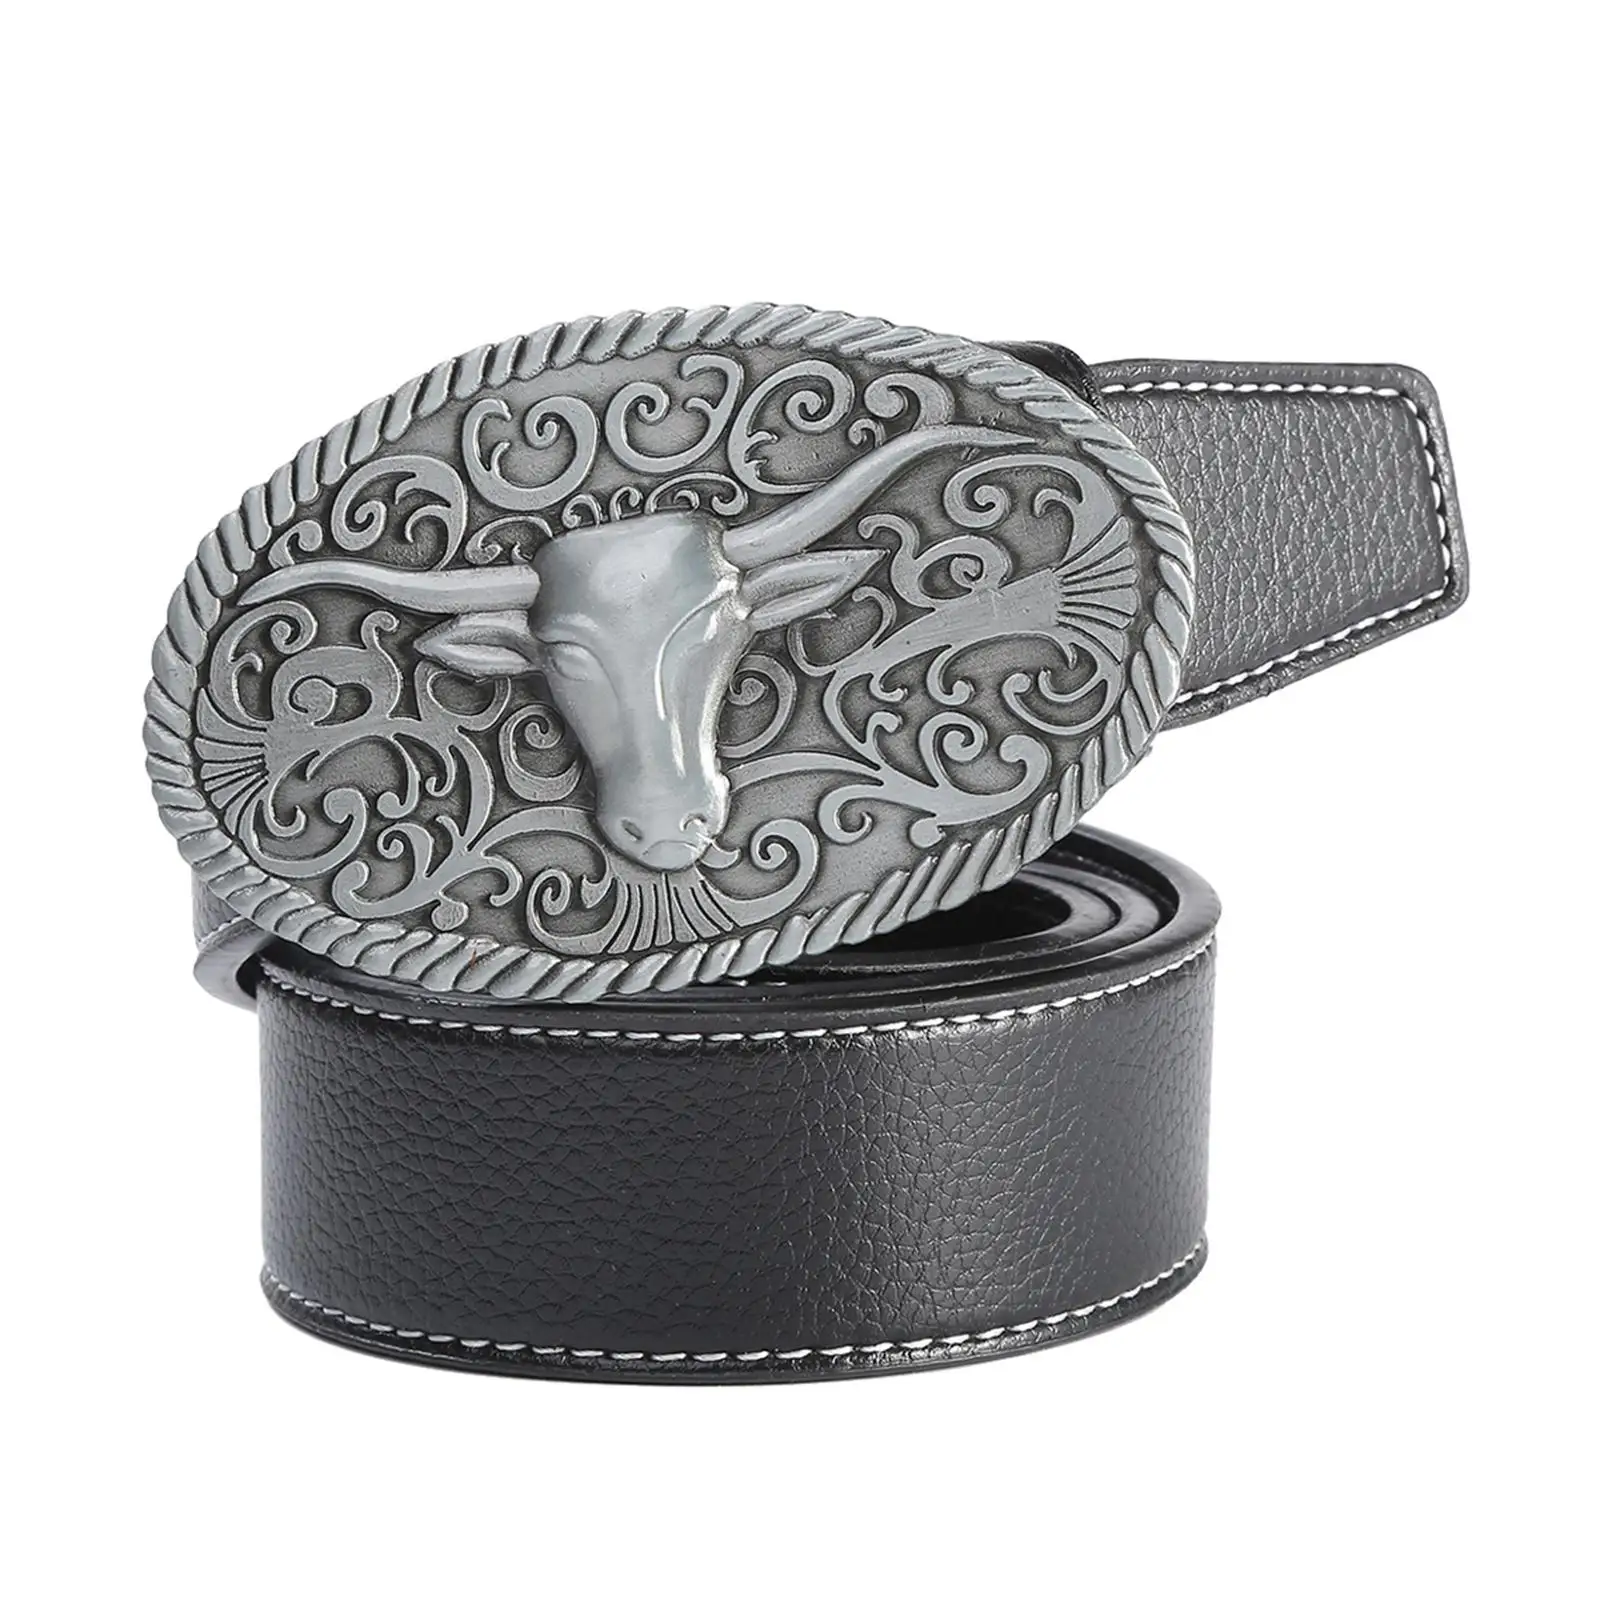 Buckle Belts Mens Leather Belt Strap Western Belt for Father Birthday Gift